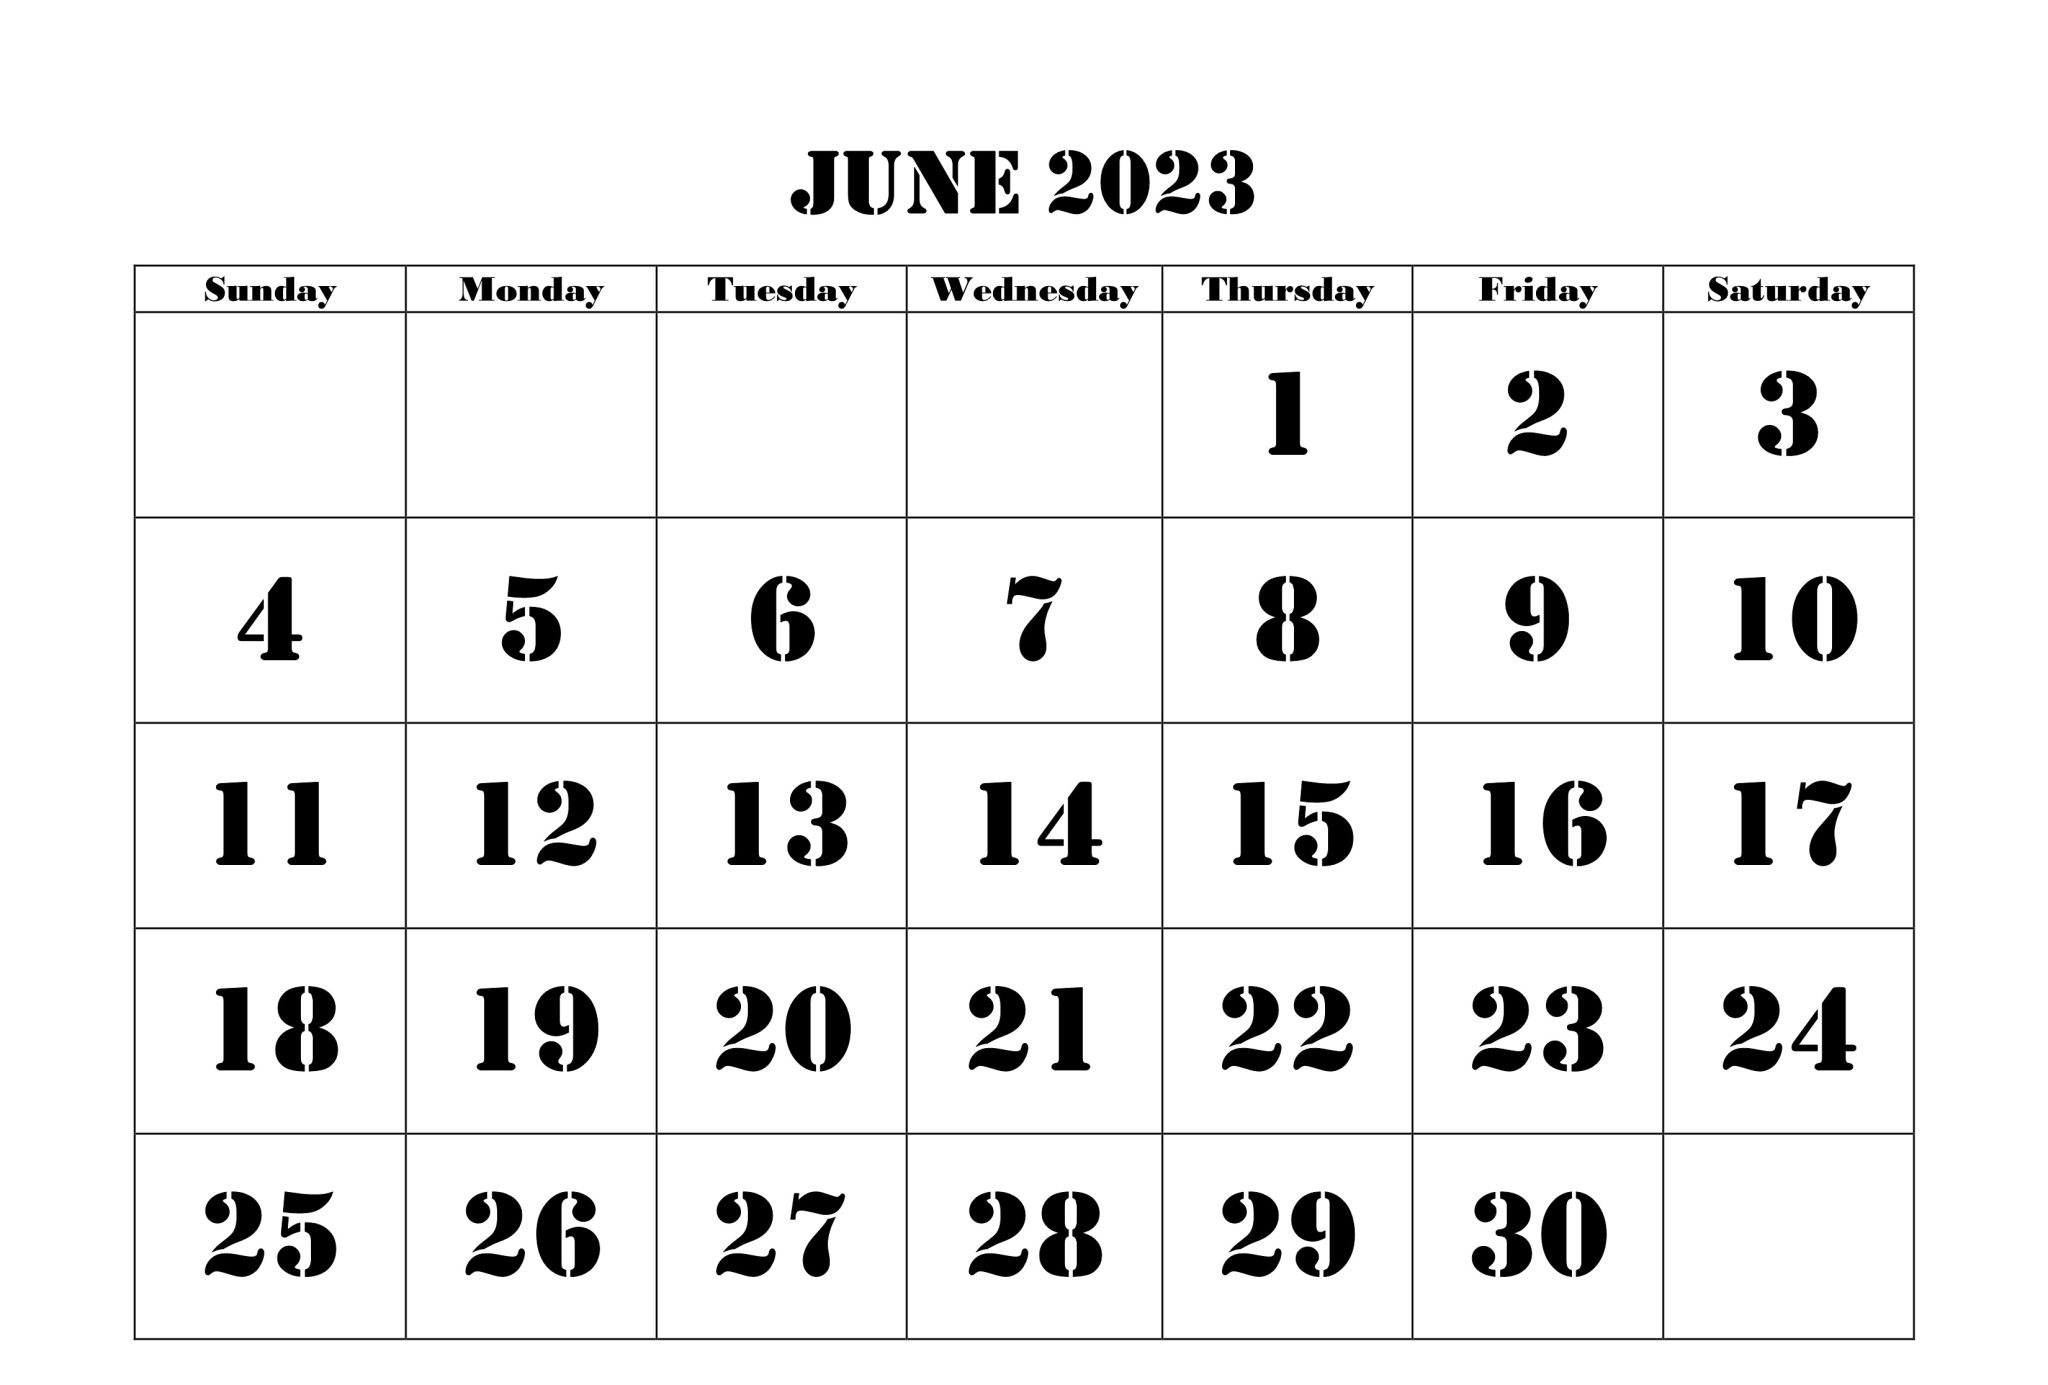 june-2023-monthly-calendar-vrogue